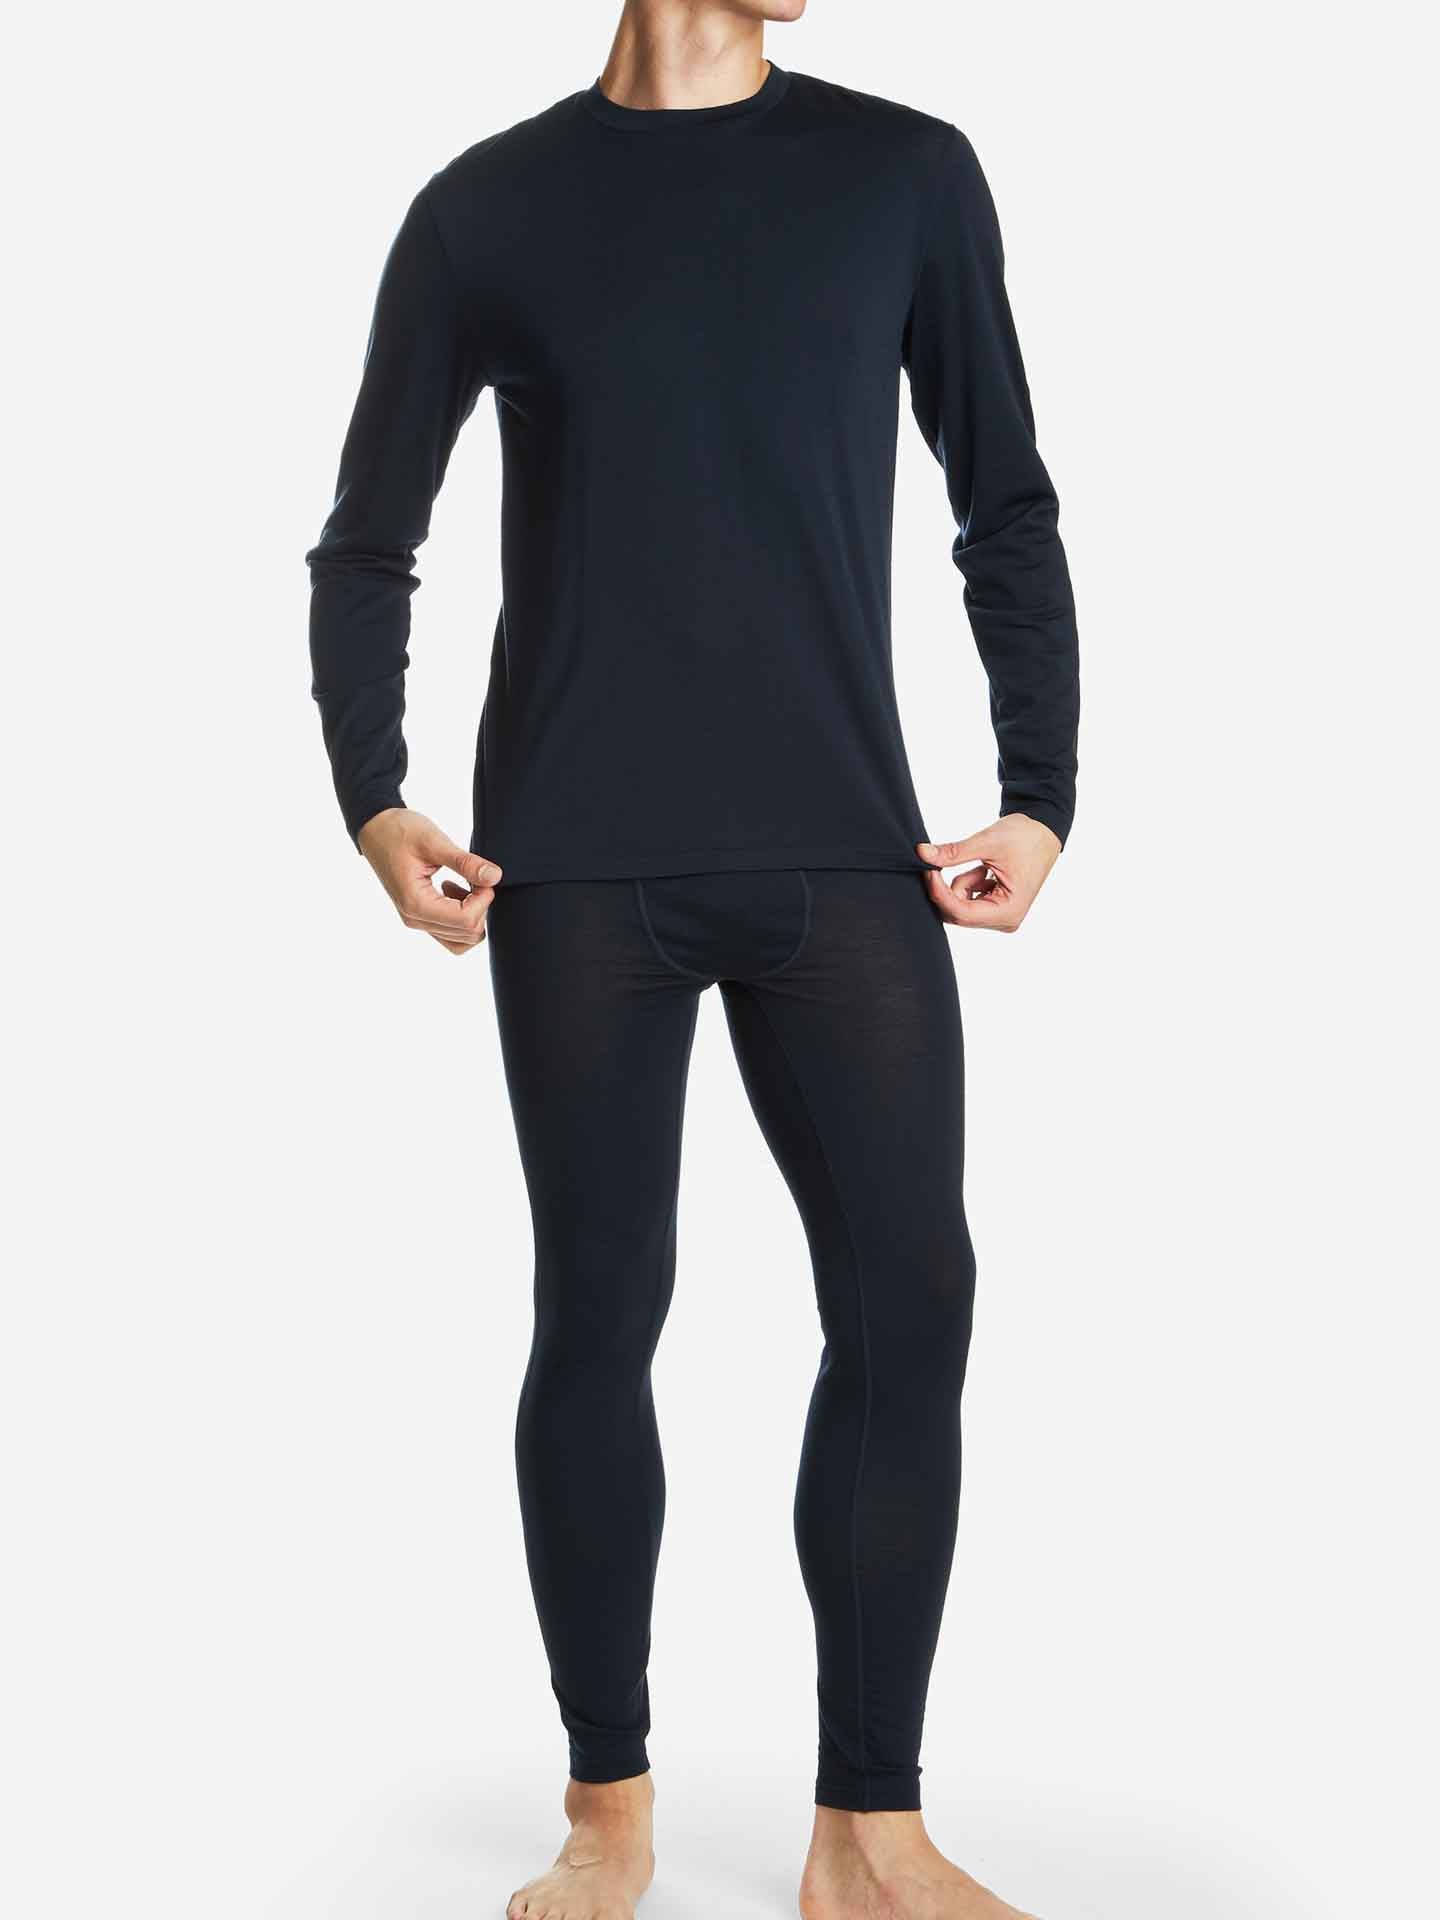 Men's Thermal Jersey Long Sleeve WOOL COTTON Underwear T-Shirt V NECK